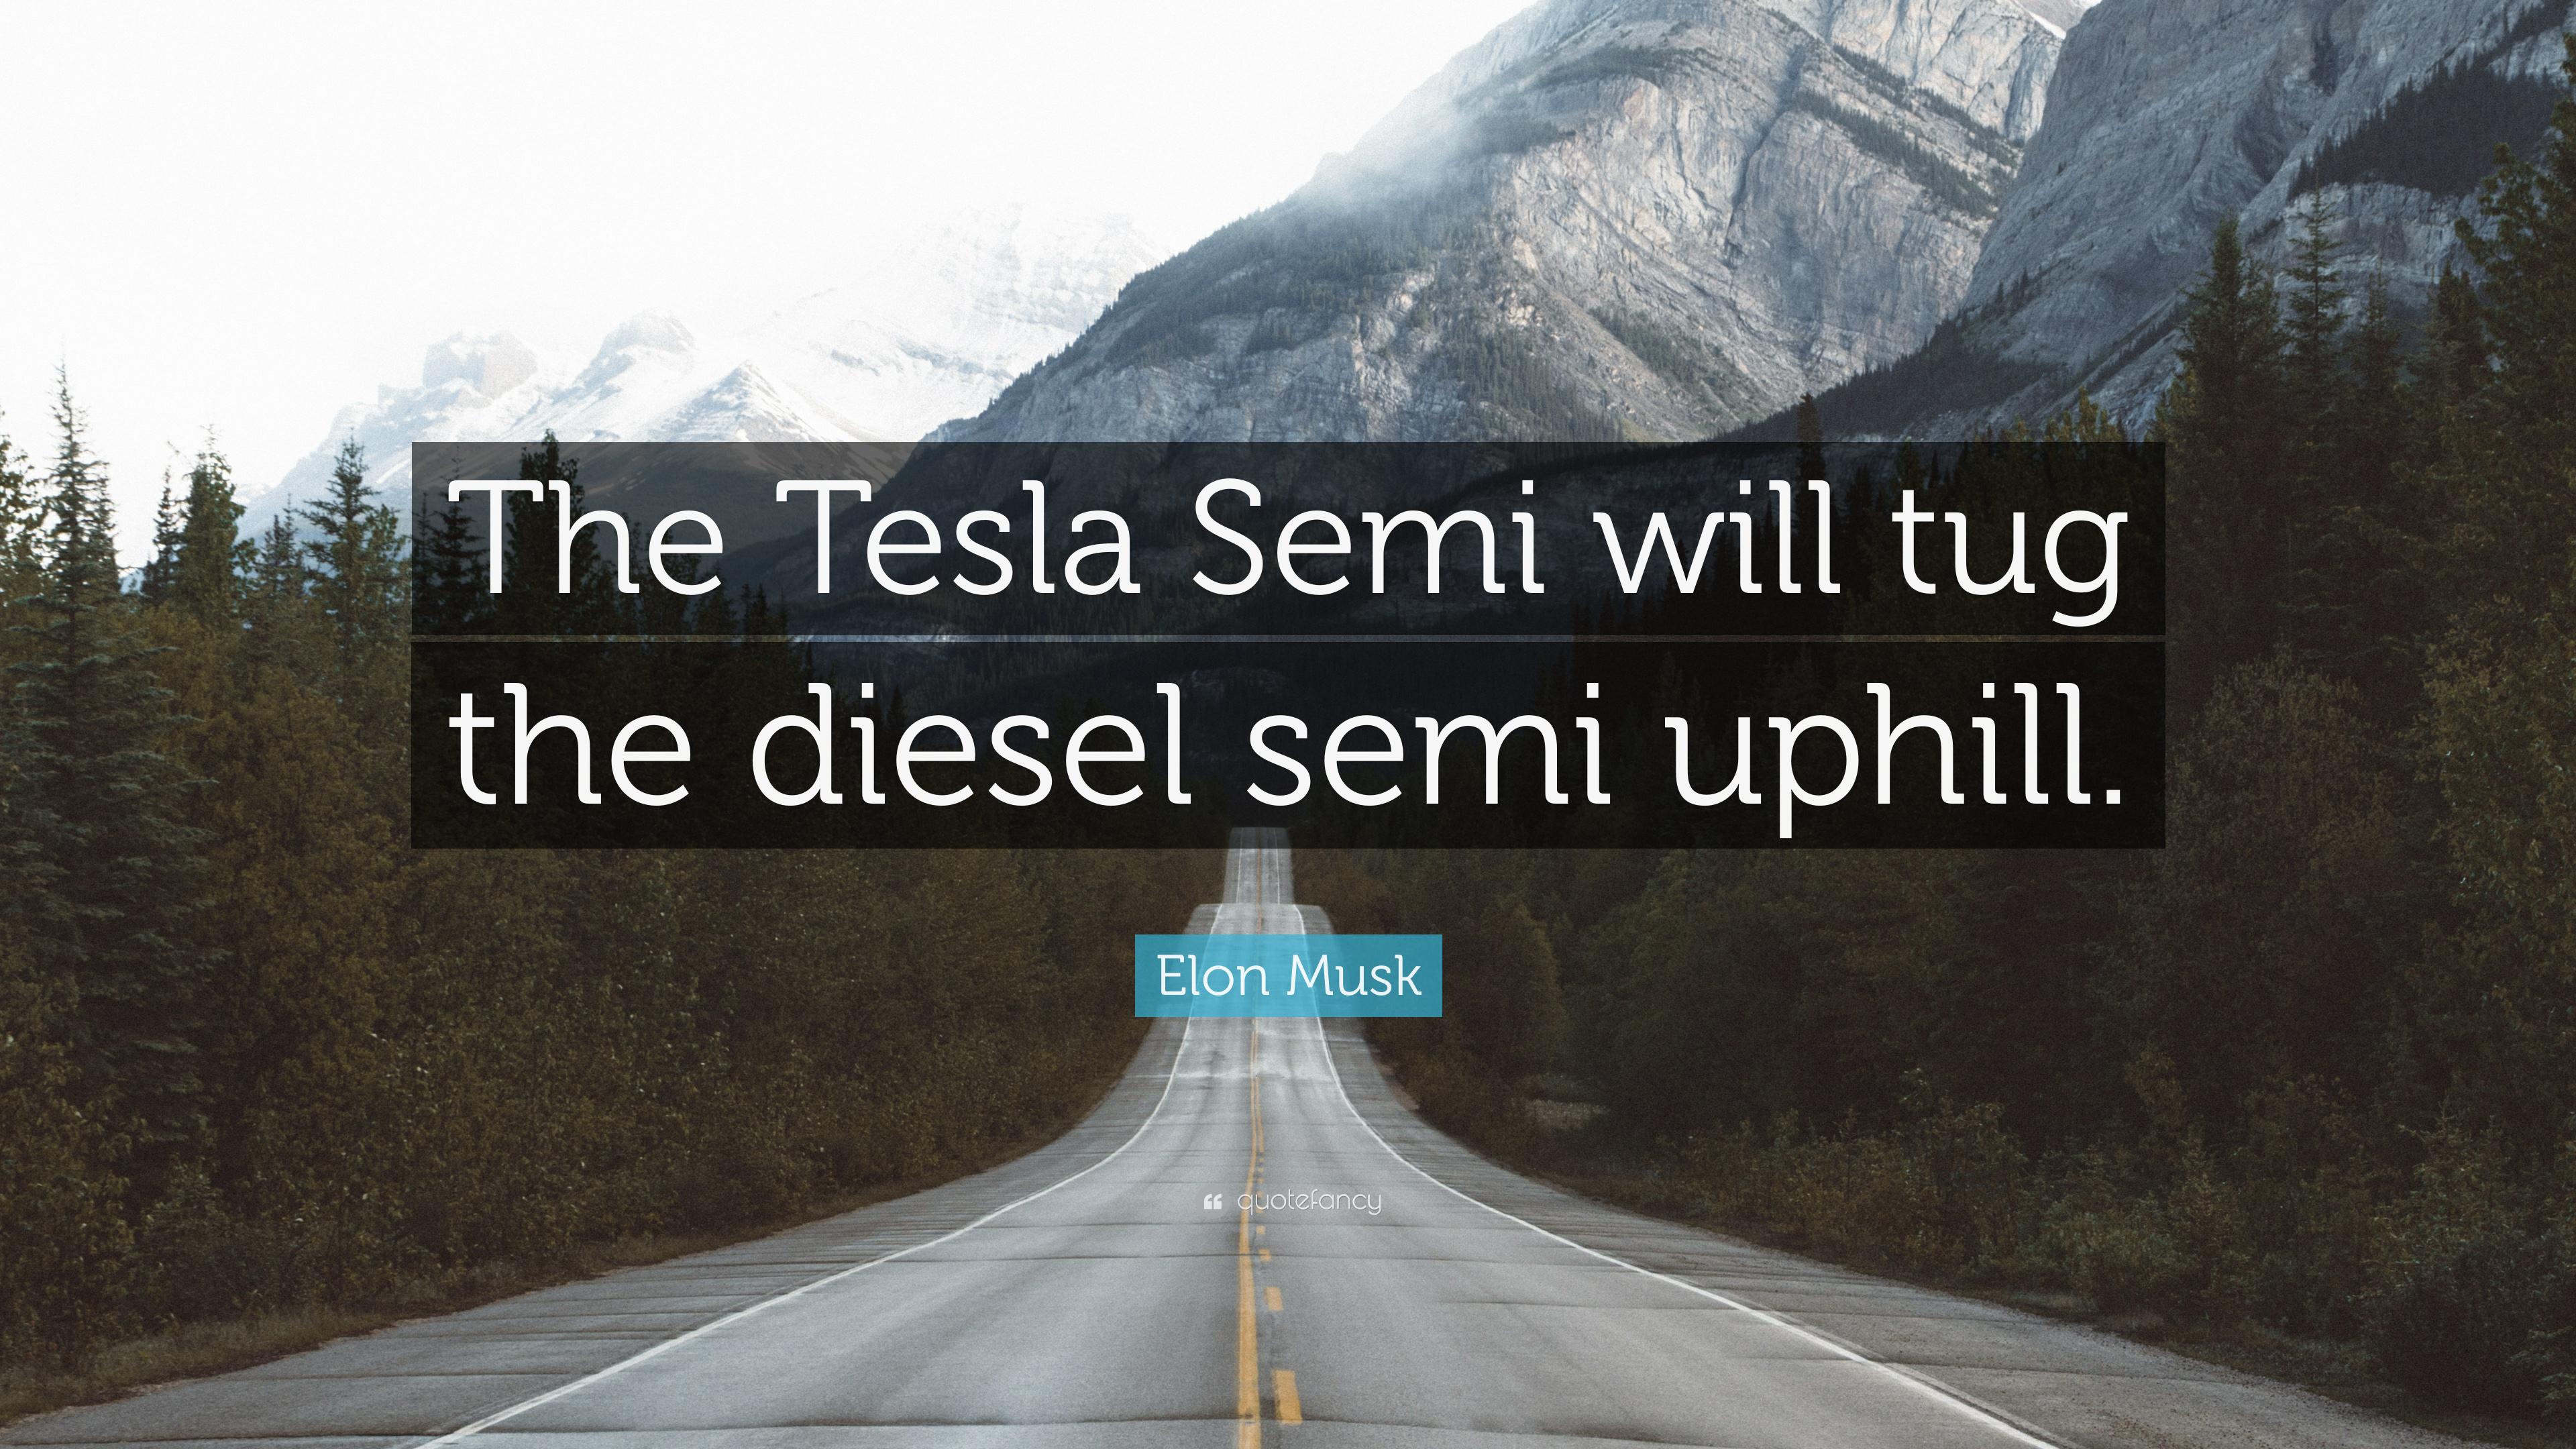 Elon Musk Quote: “The Tesla Semi will tug the diesel semi